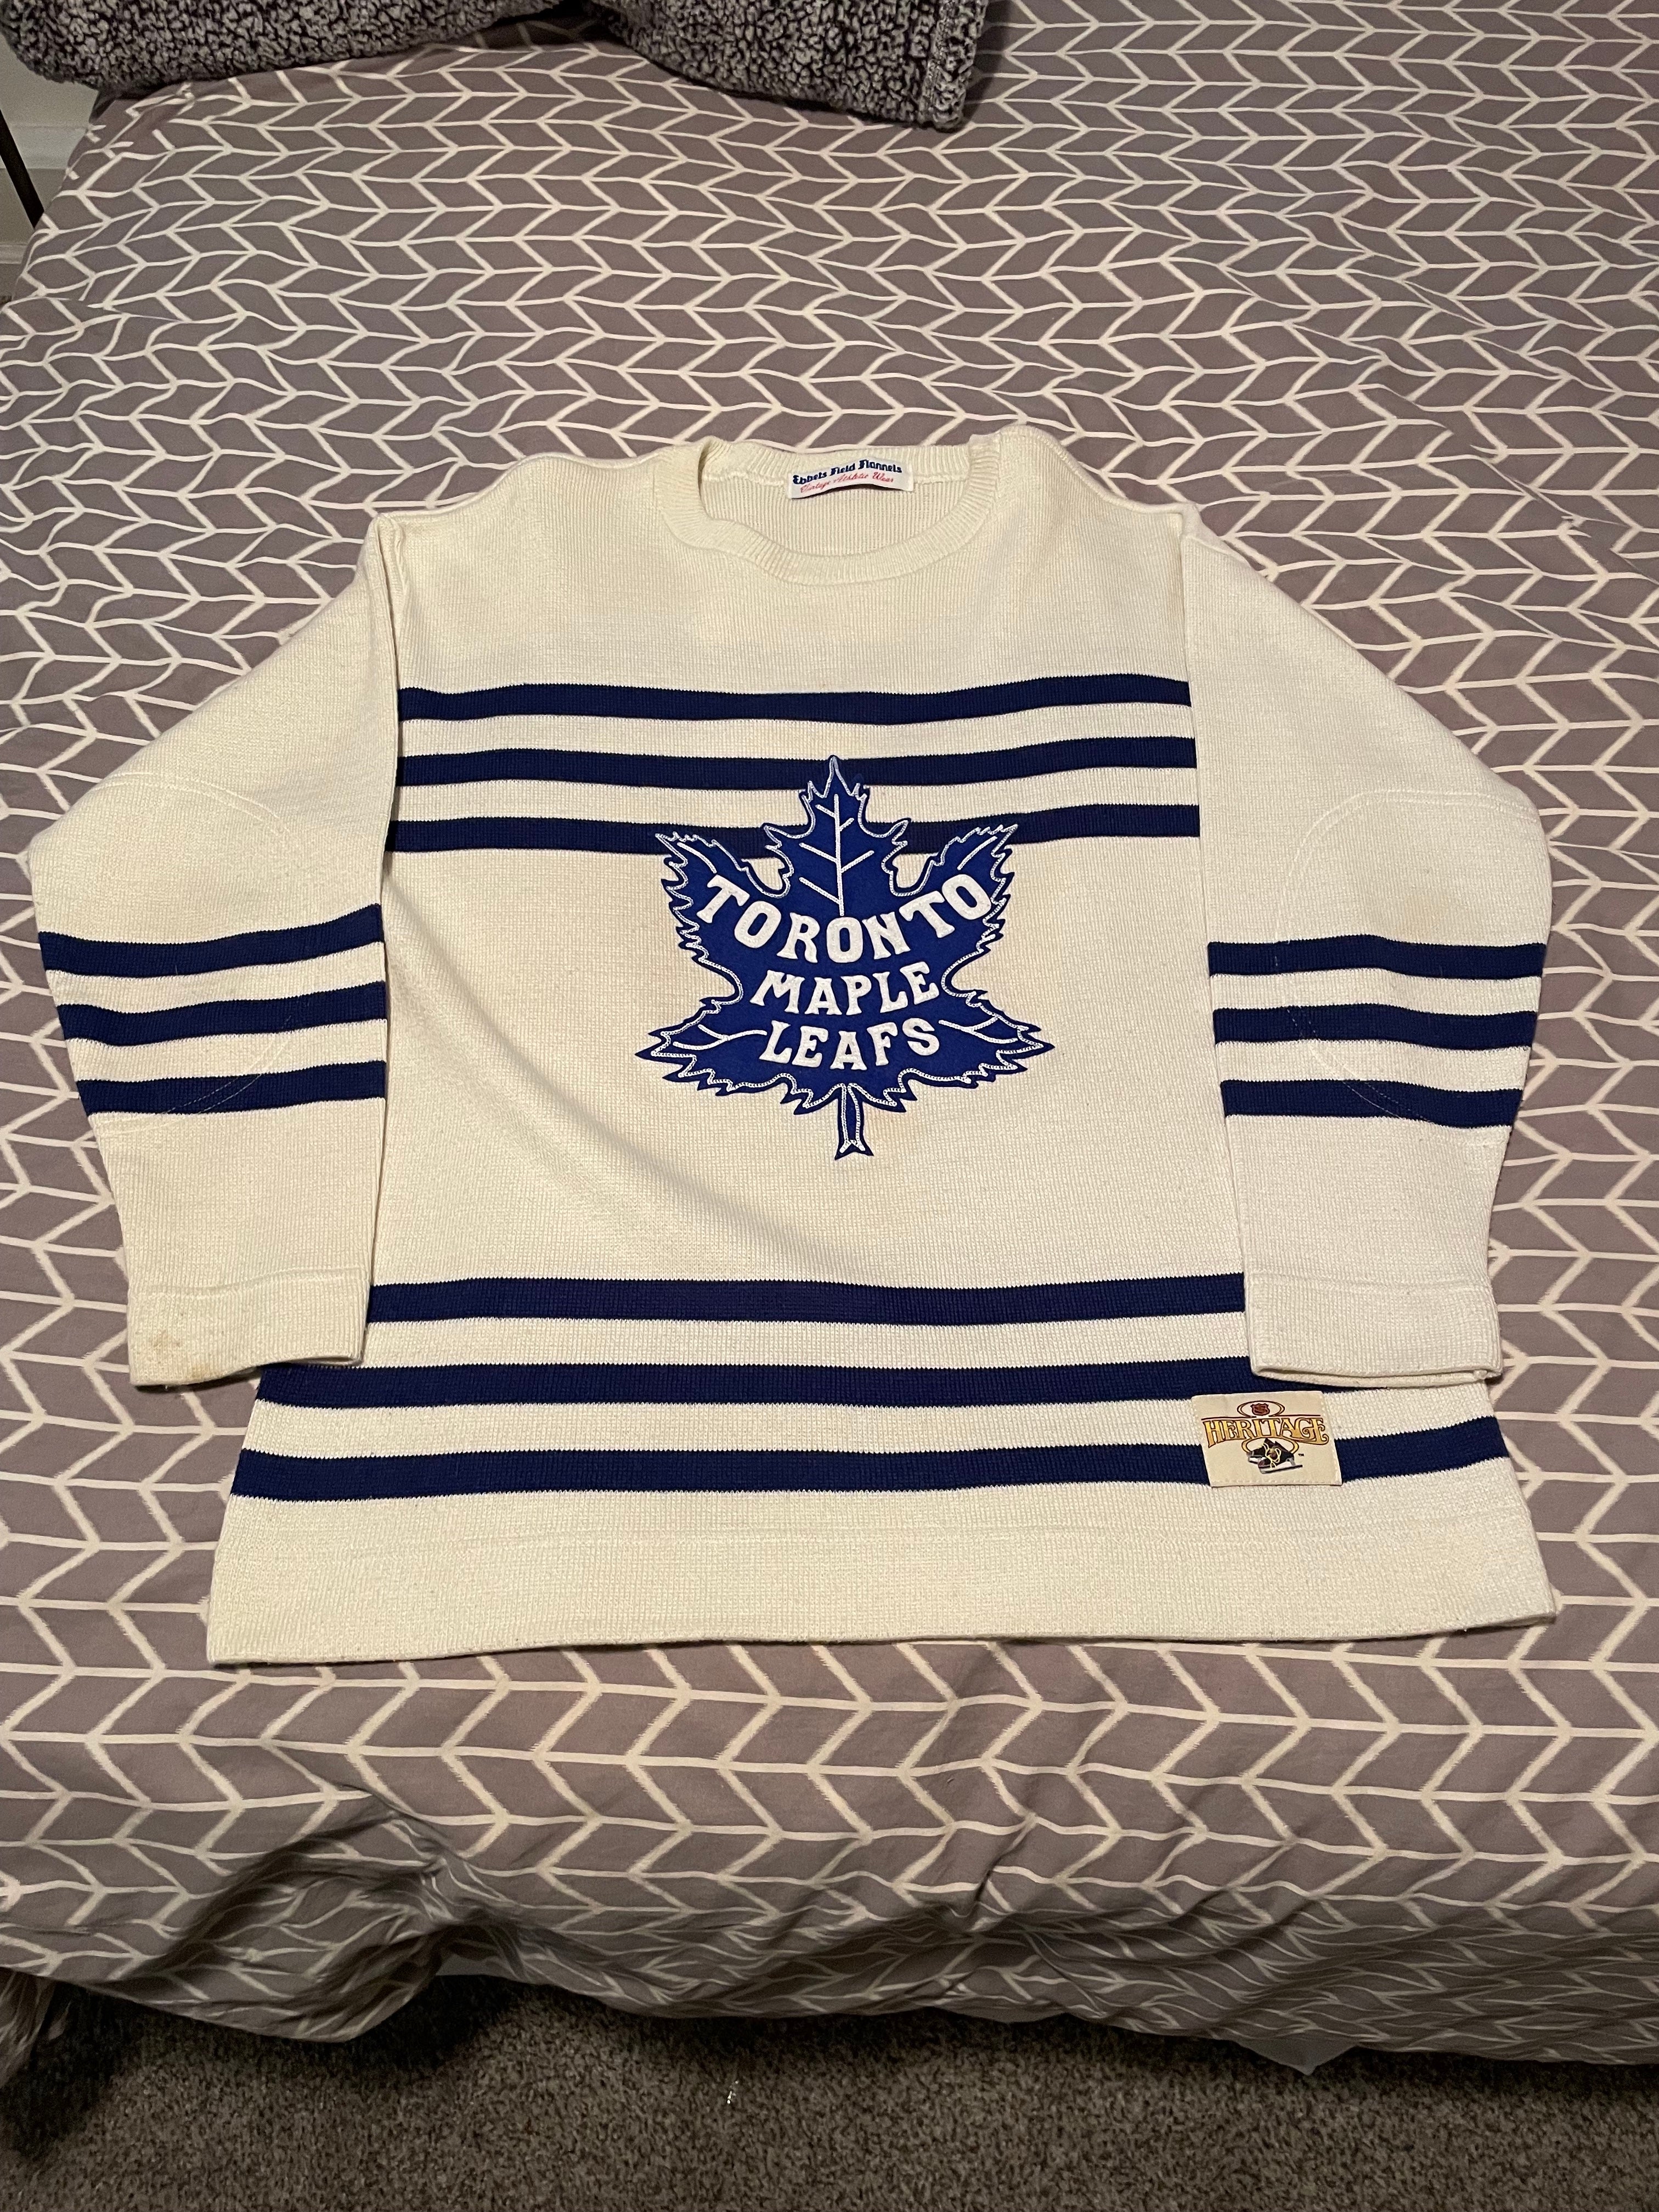 Ebbets Field Flannels Toronto Maple Leafs Vintage Crewneck Sweatshirt